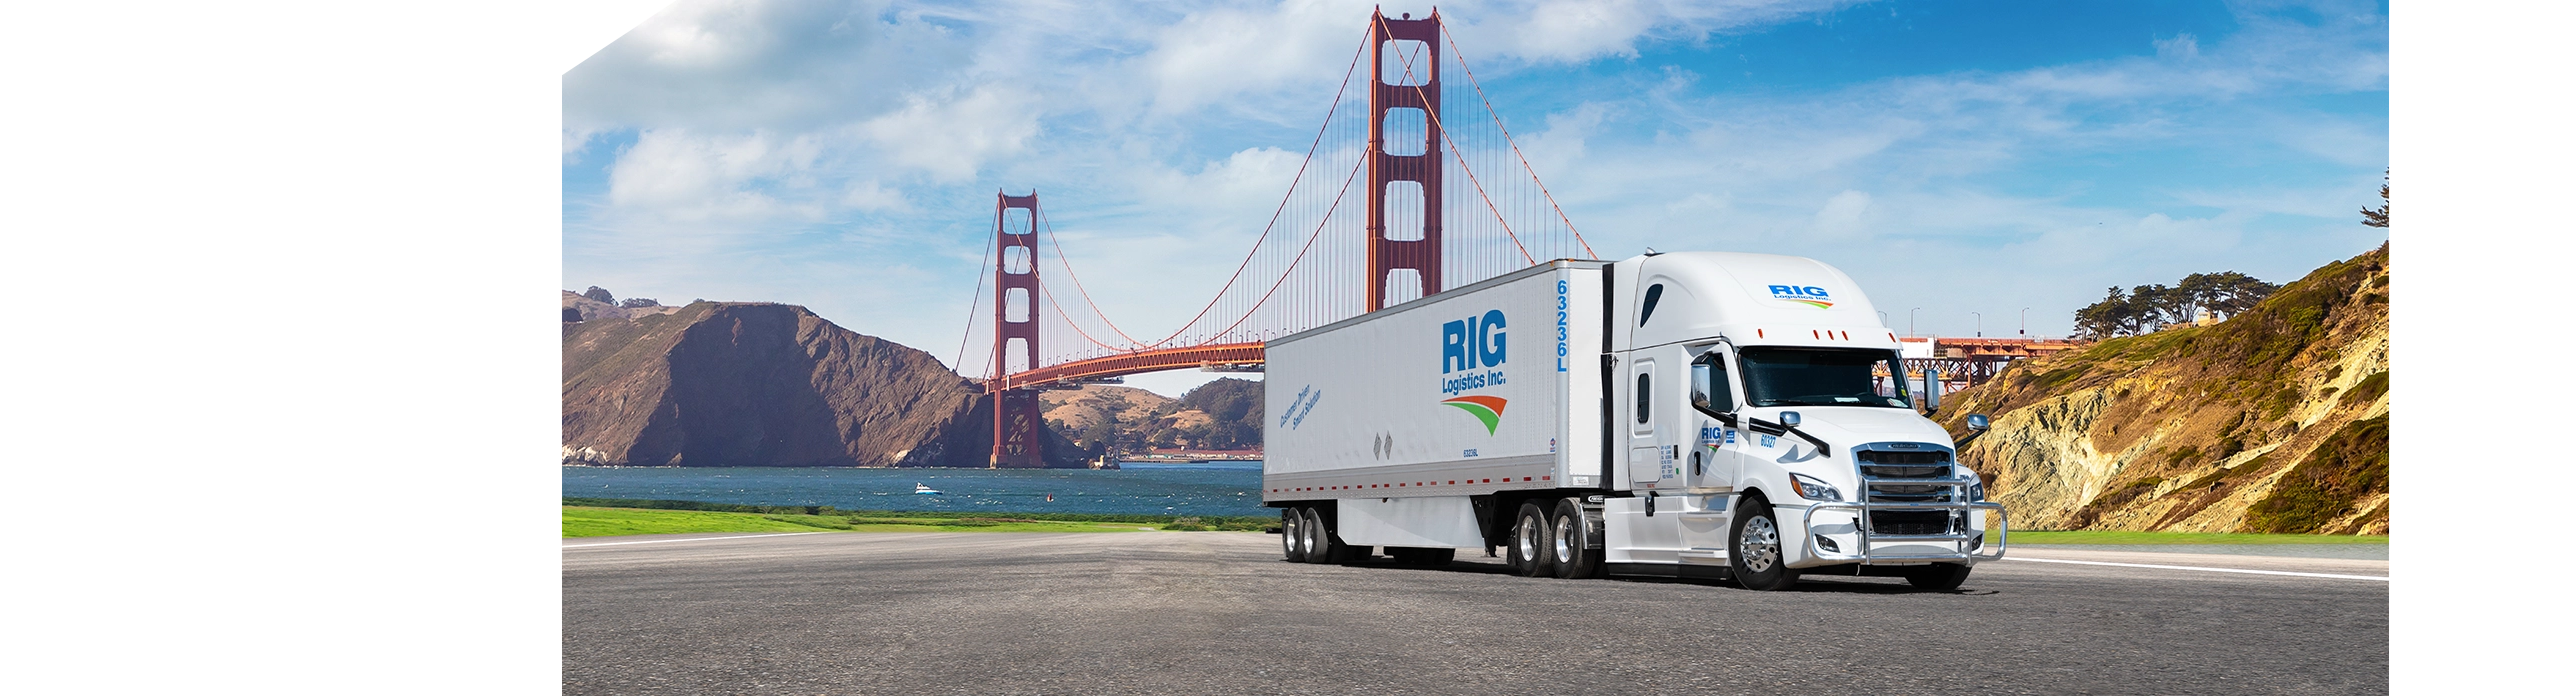 RIG Logistics highway truck parked in front of Golden Gate Bridge in San Francisco